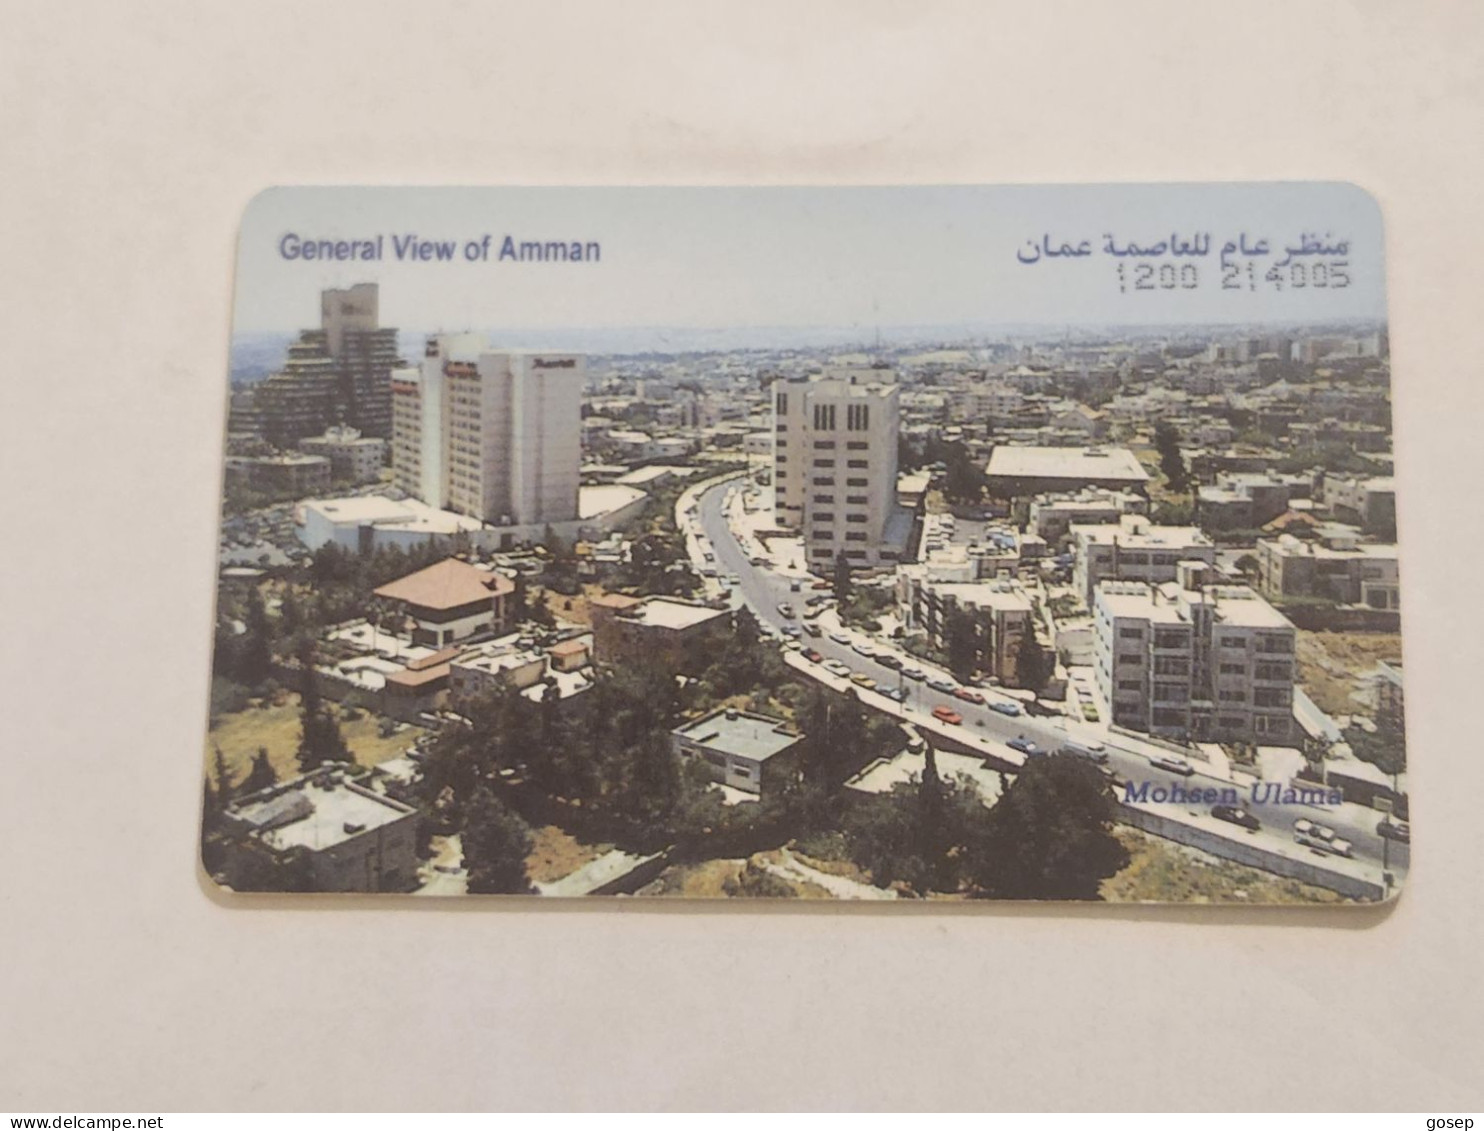 JORDAN-(JO-ALO-0028)-King Abdullah Mosque-(125)-(1200-214005)-(15JD)-(9/2000)-used Card+1card Prepiad Free - Jordanien